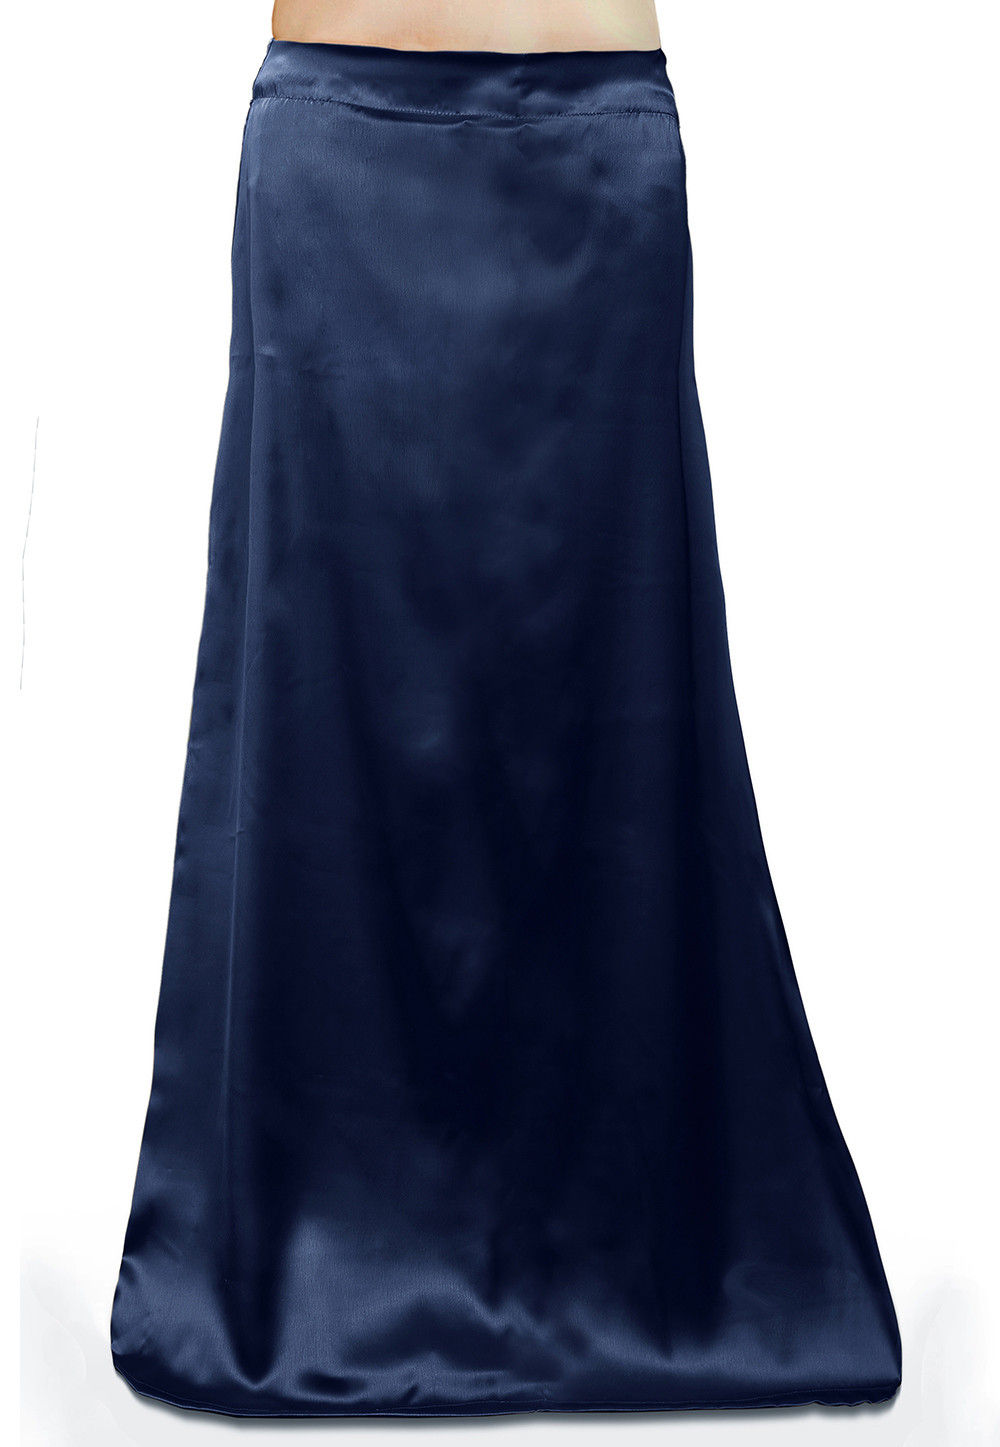 Satin Petticoat in Navy Blue : UUB72